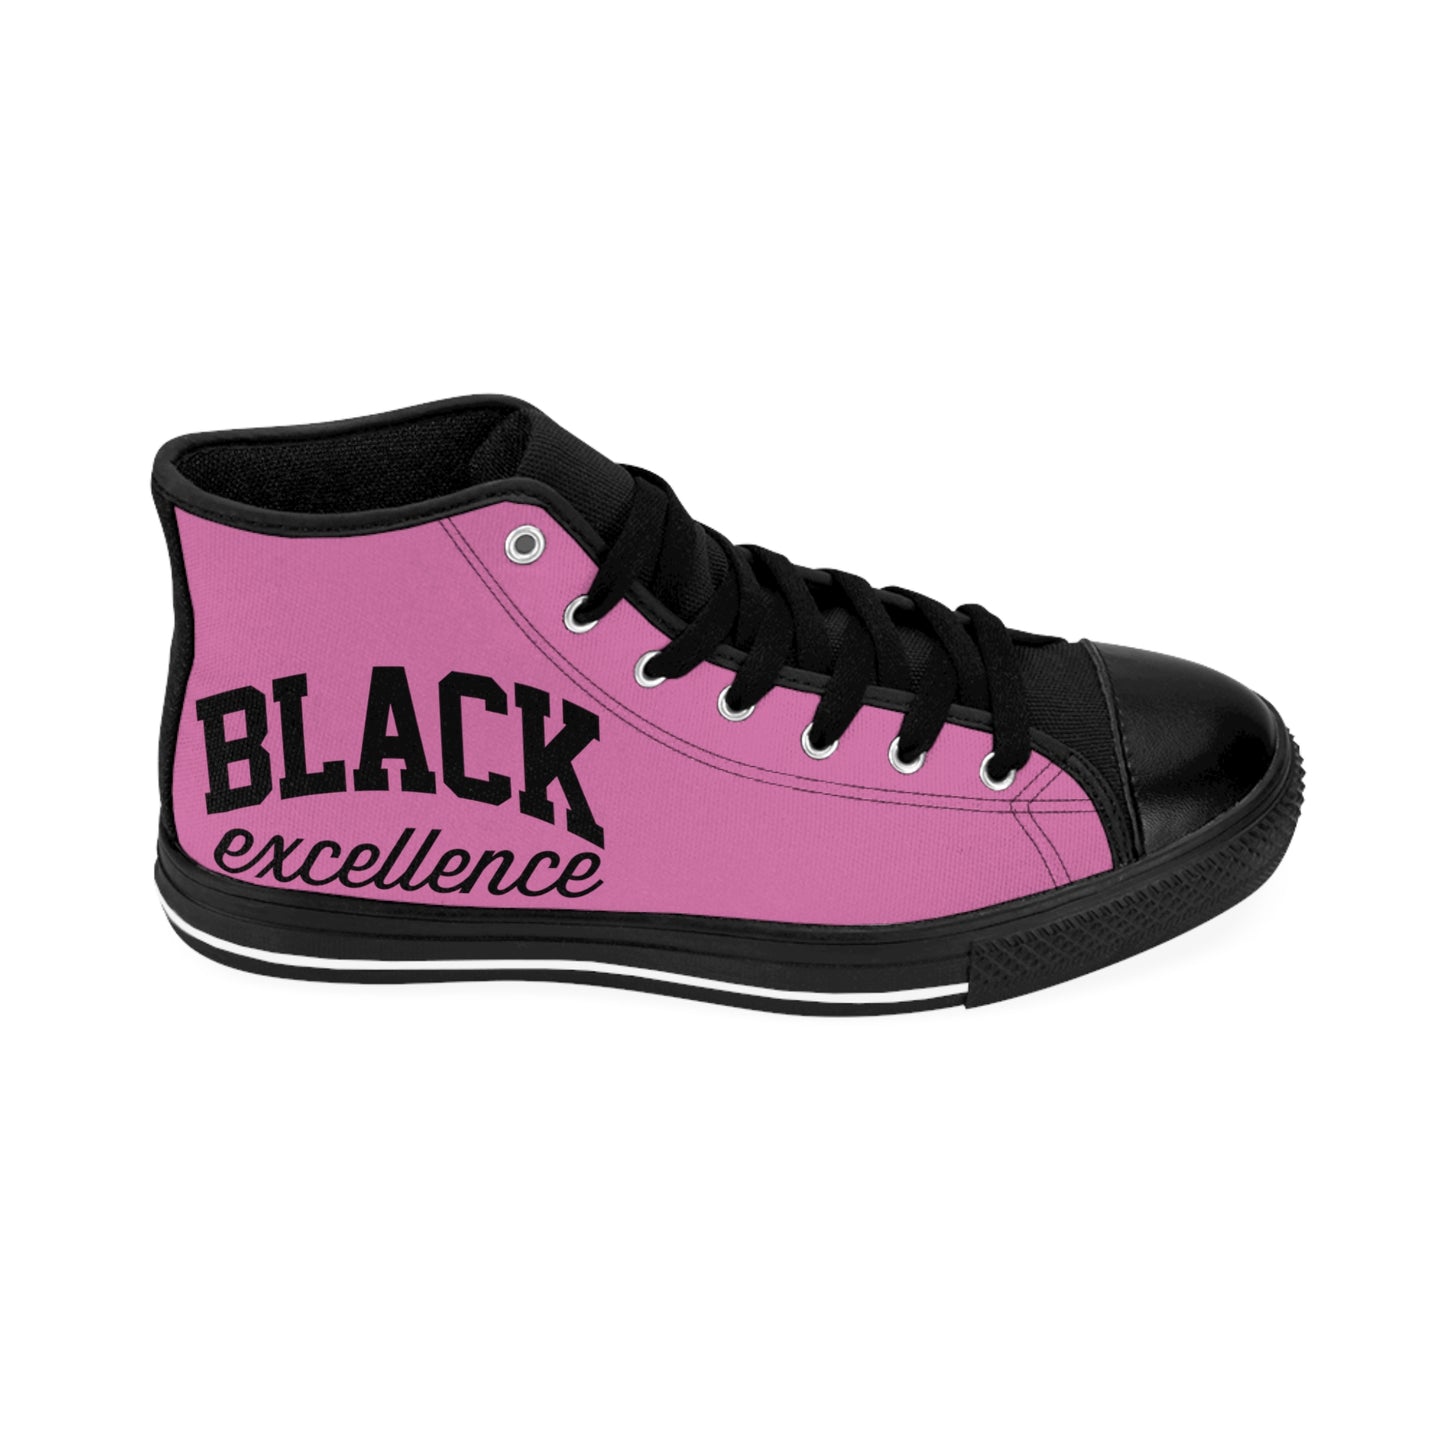 Kings Attire Shoe- Black Excellence